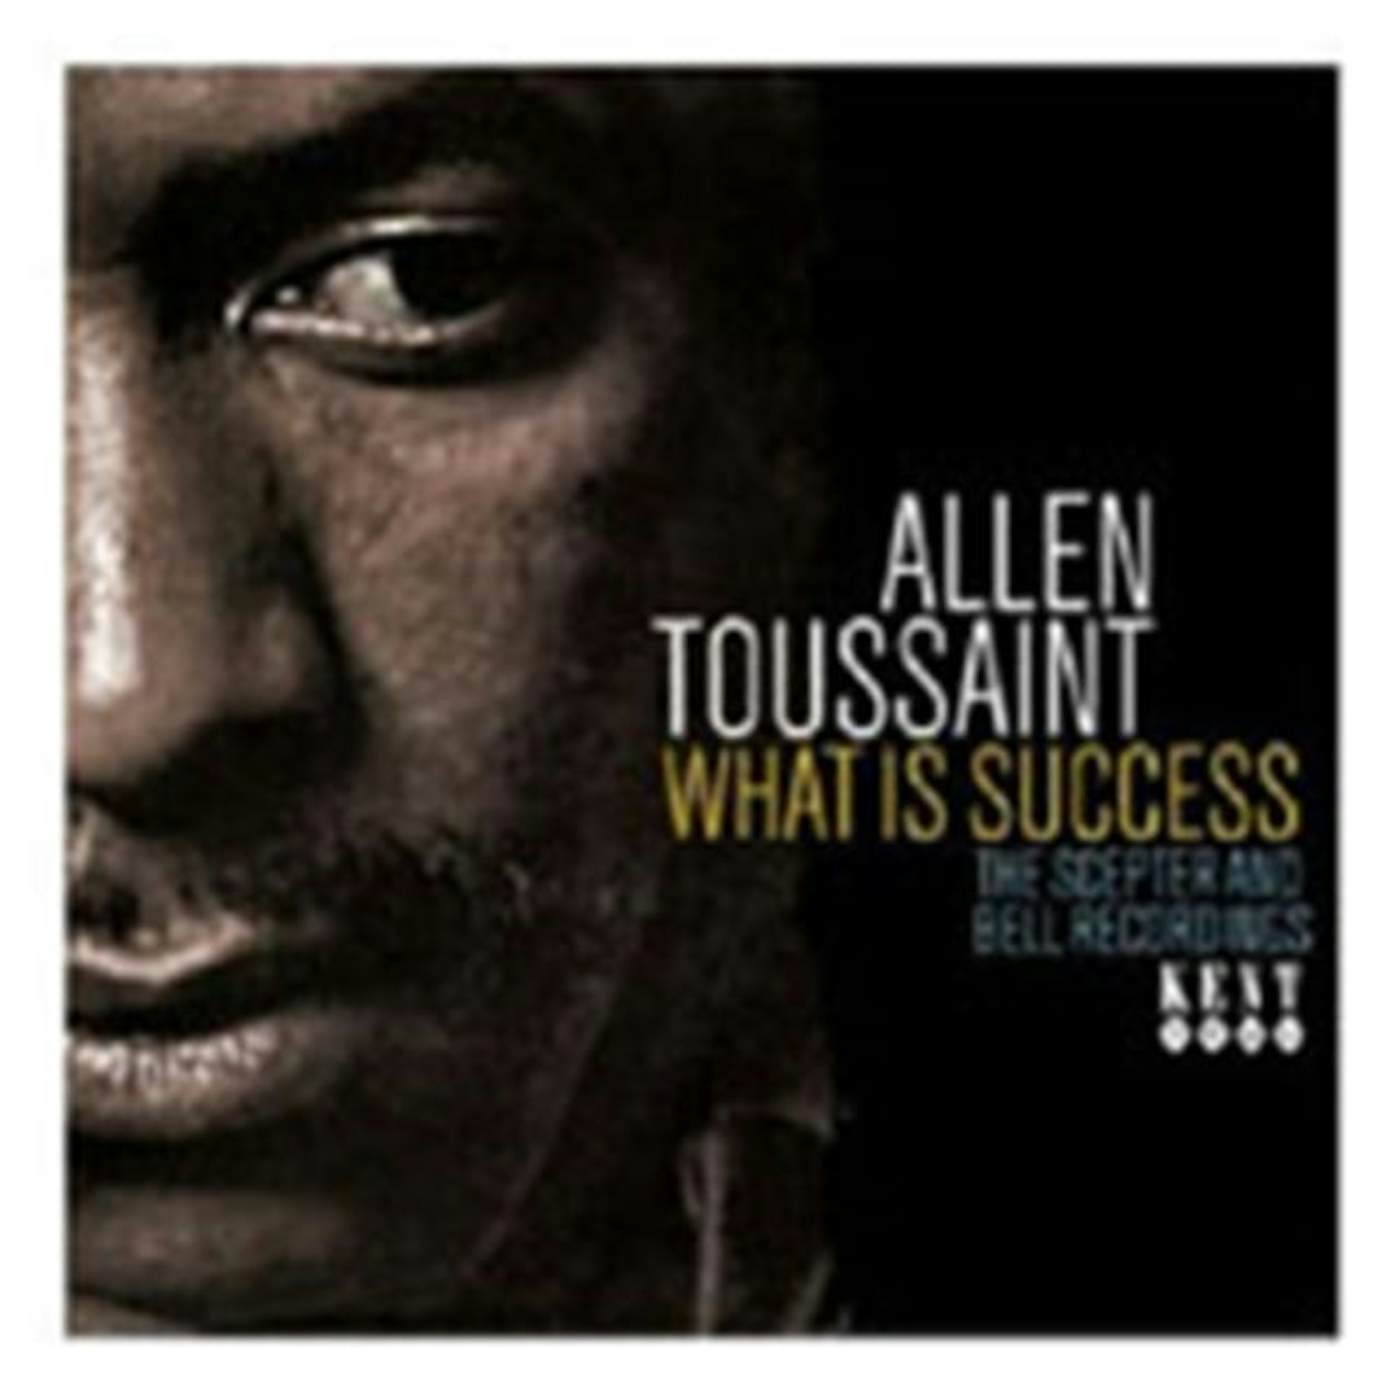 Allen Toussaint CD - What Is Success The Scepter Bell Rec